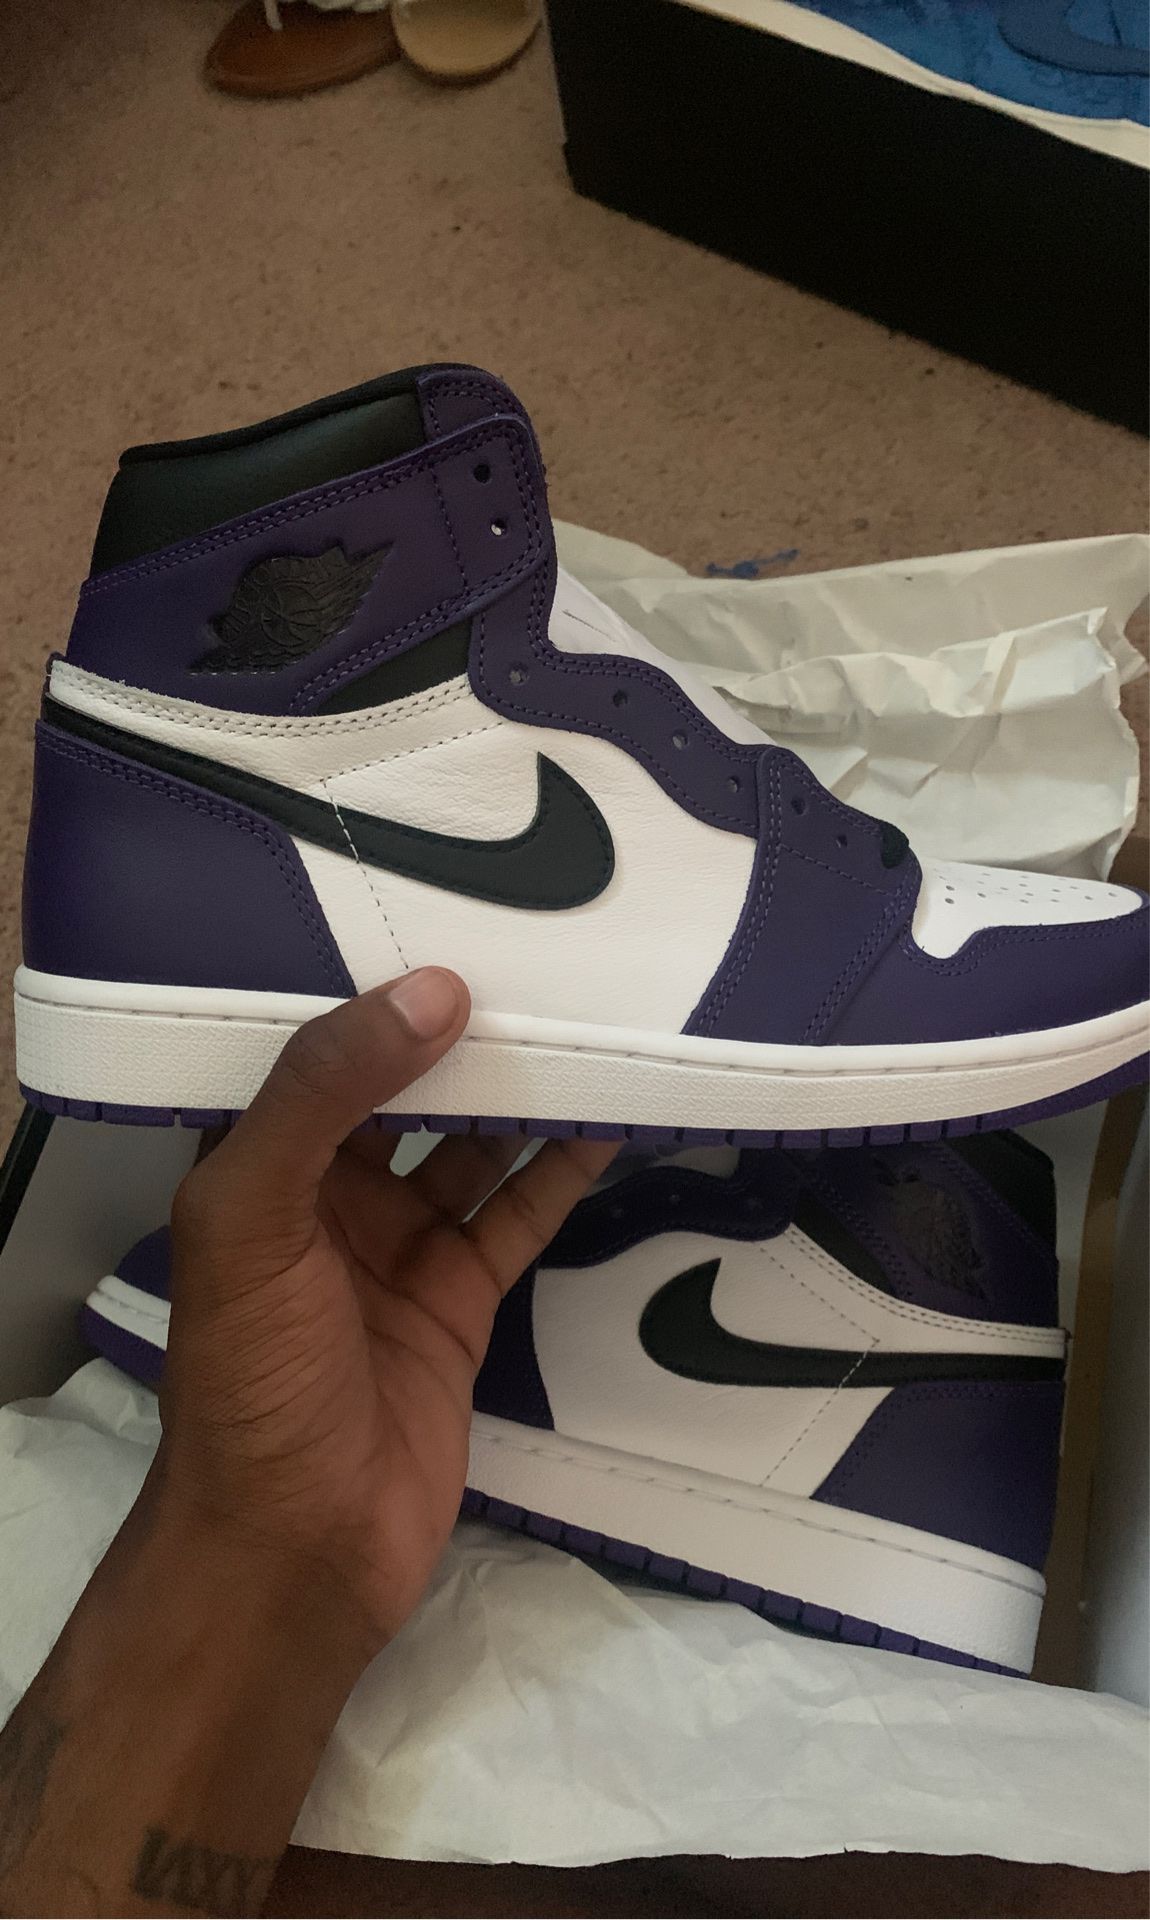 Jordan 1 court purple size 8.5